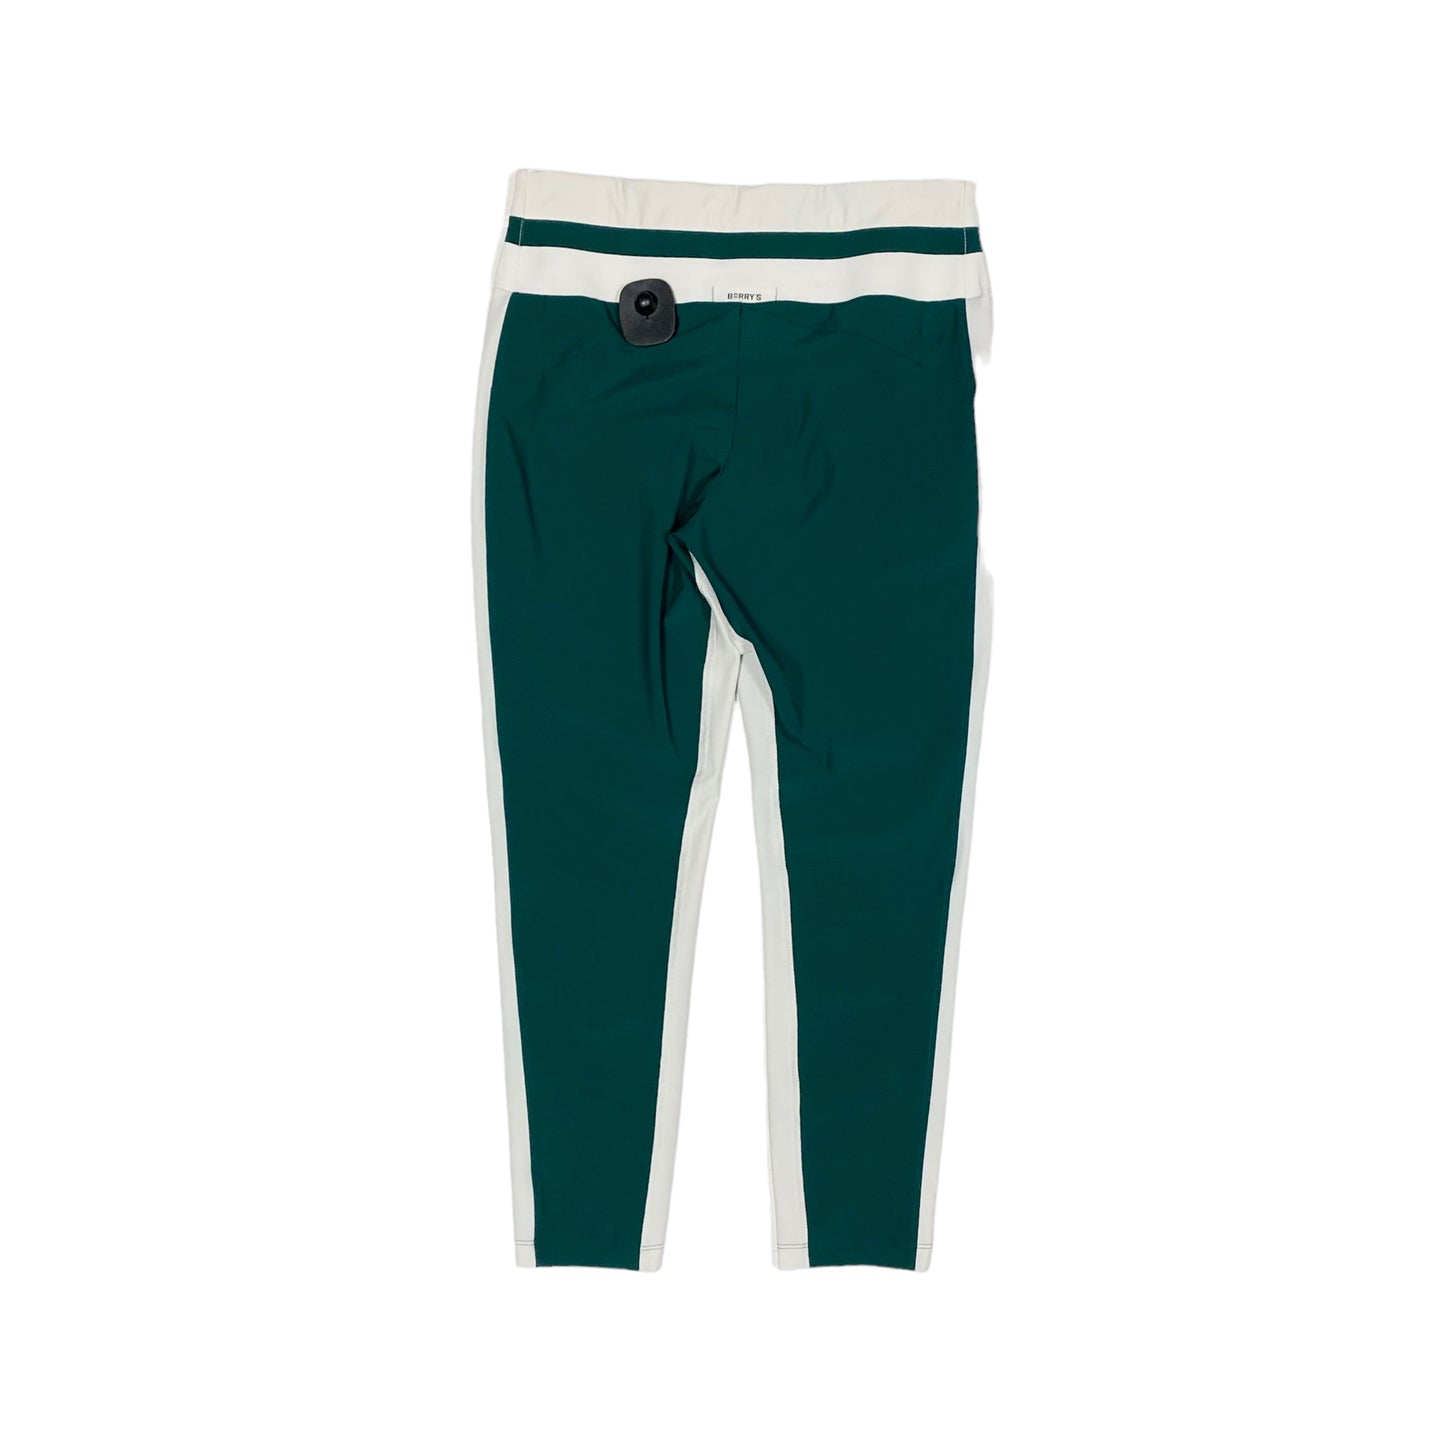 Athletic Pants By  VAARA X BARRYS Size: S